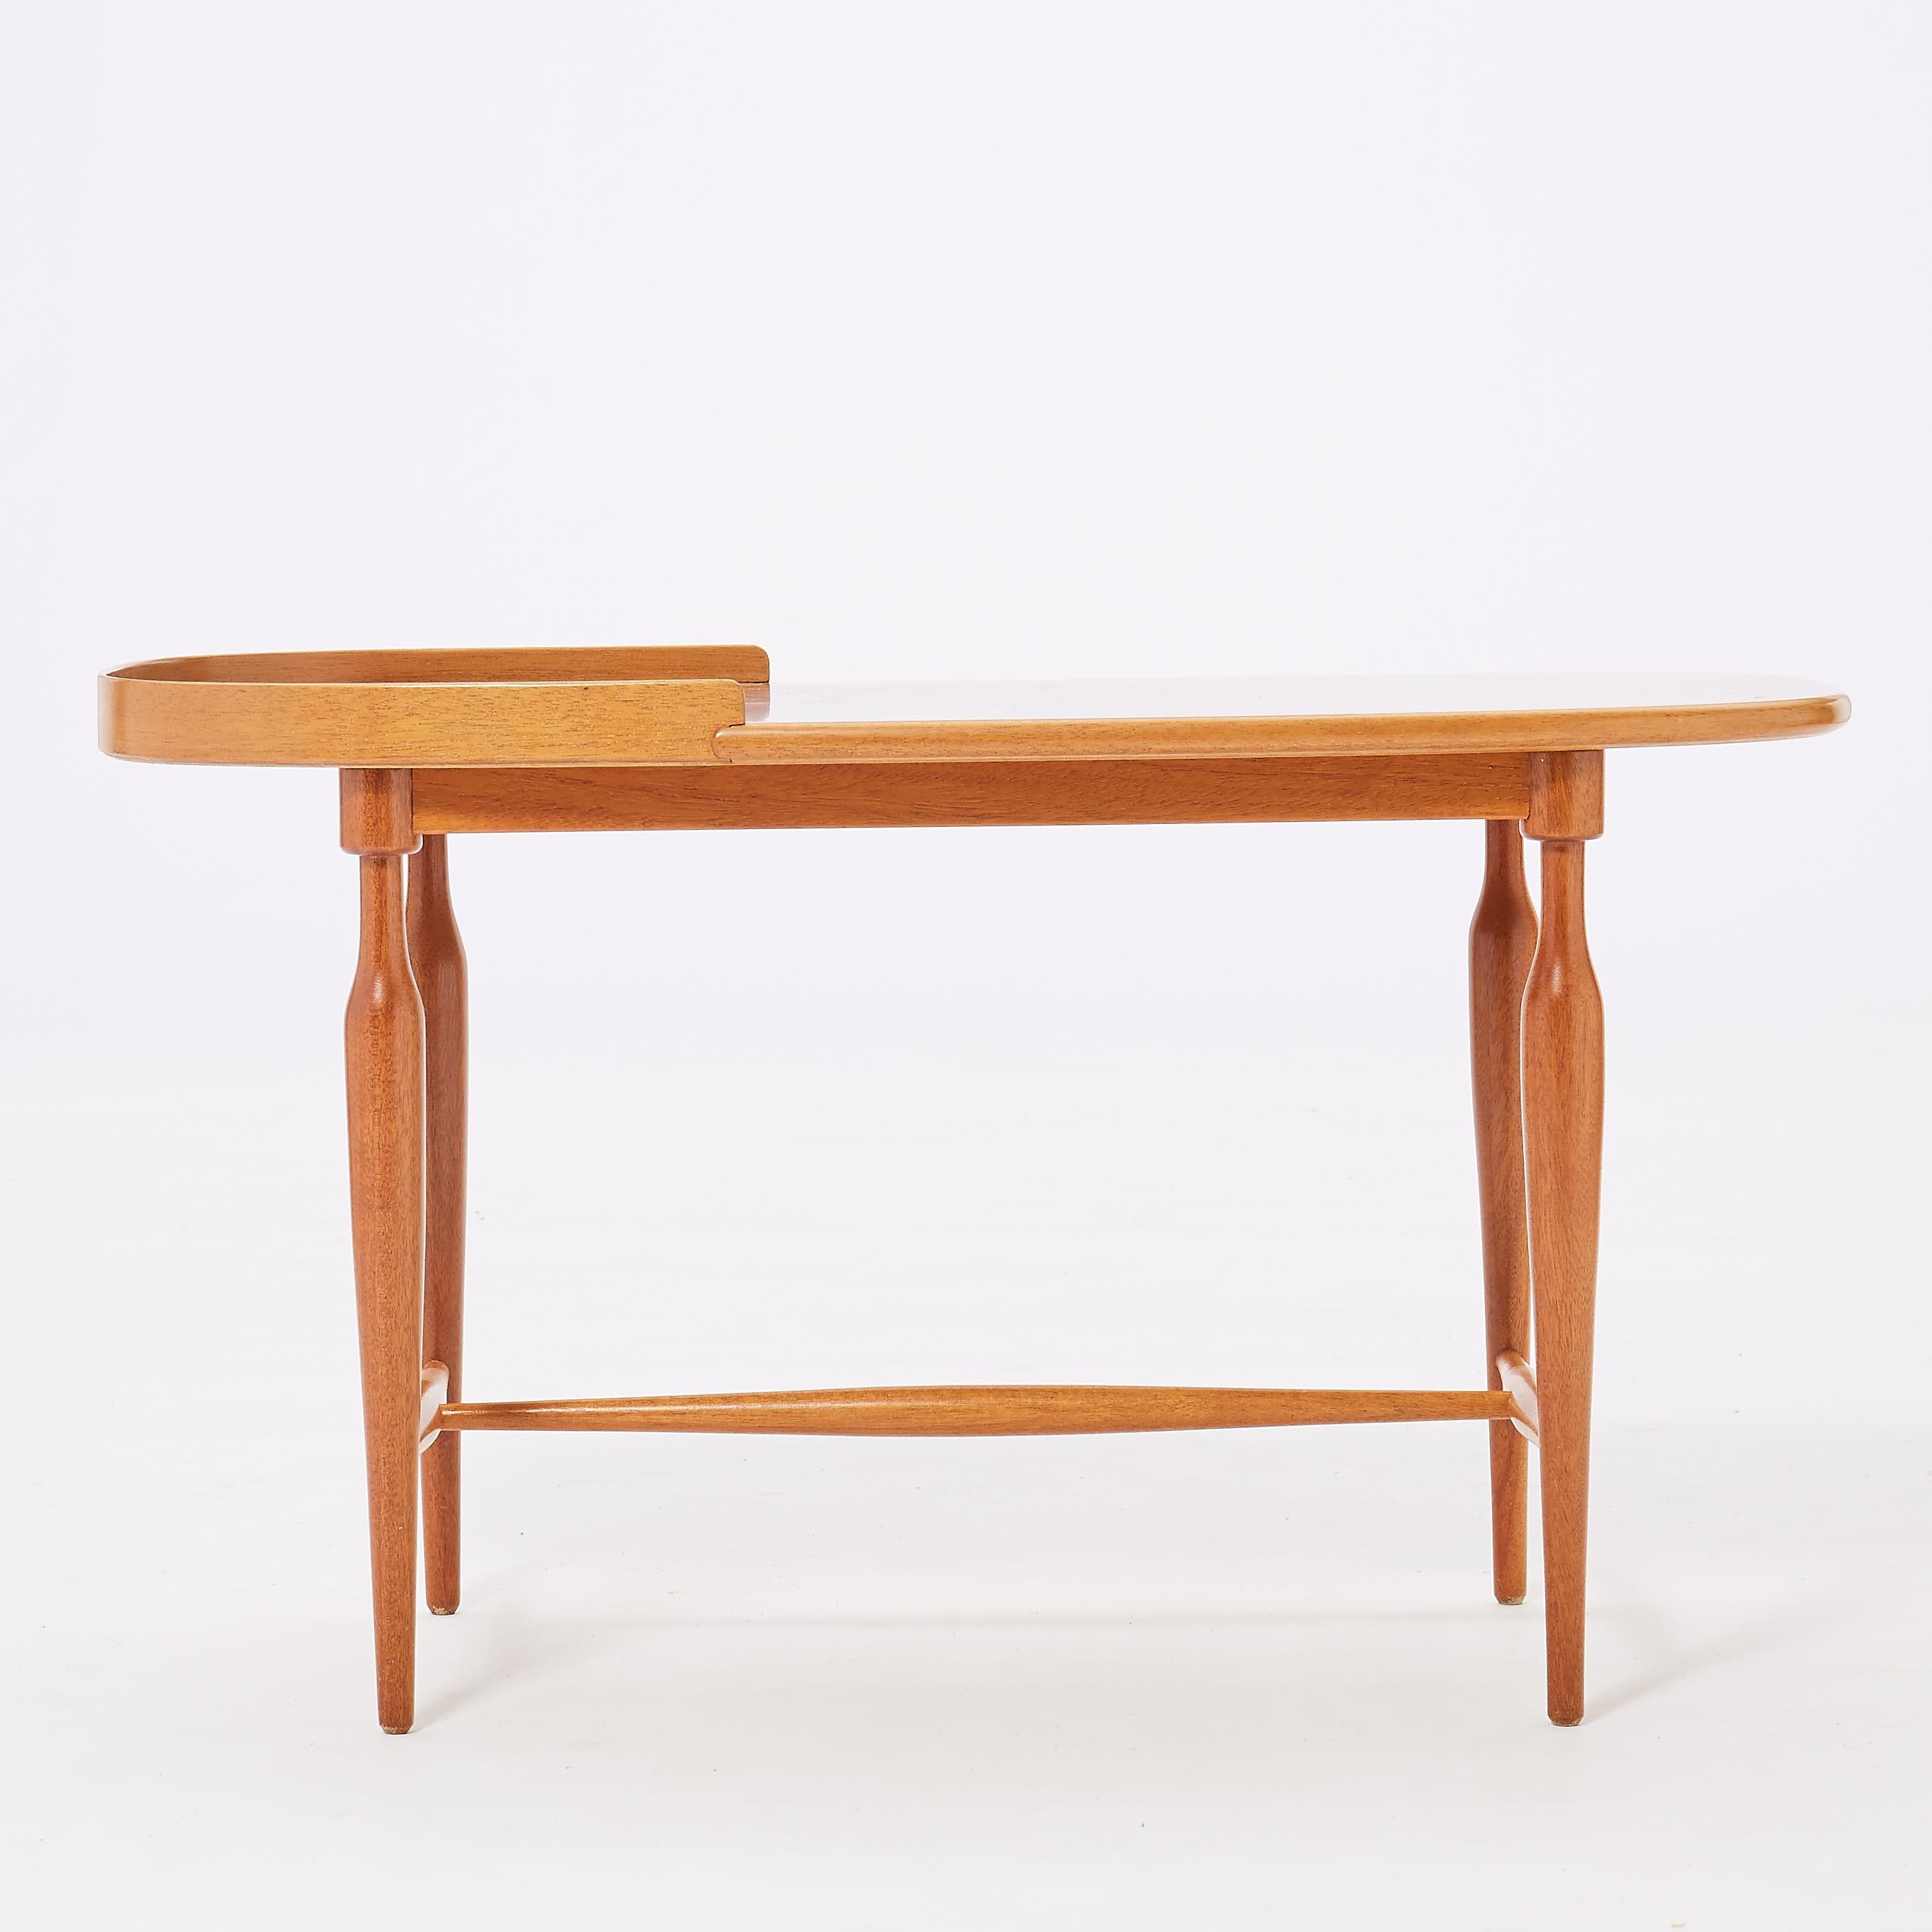 Scandinavian Modern Side Table Model 961 Designed by Josef Frank for Svenskt Tenn, Sweden For Sale